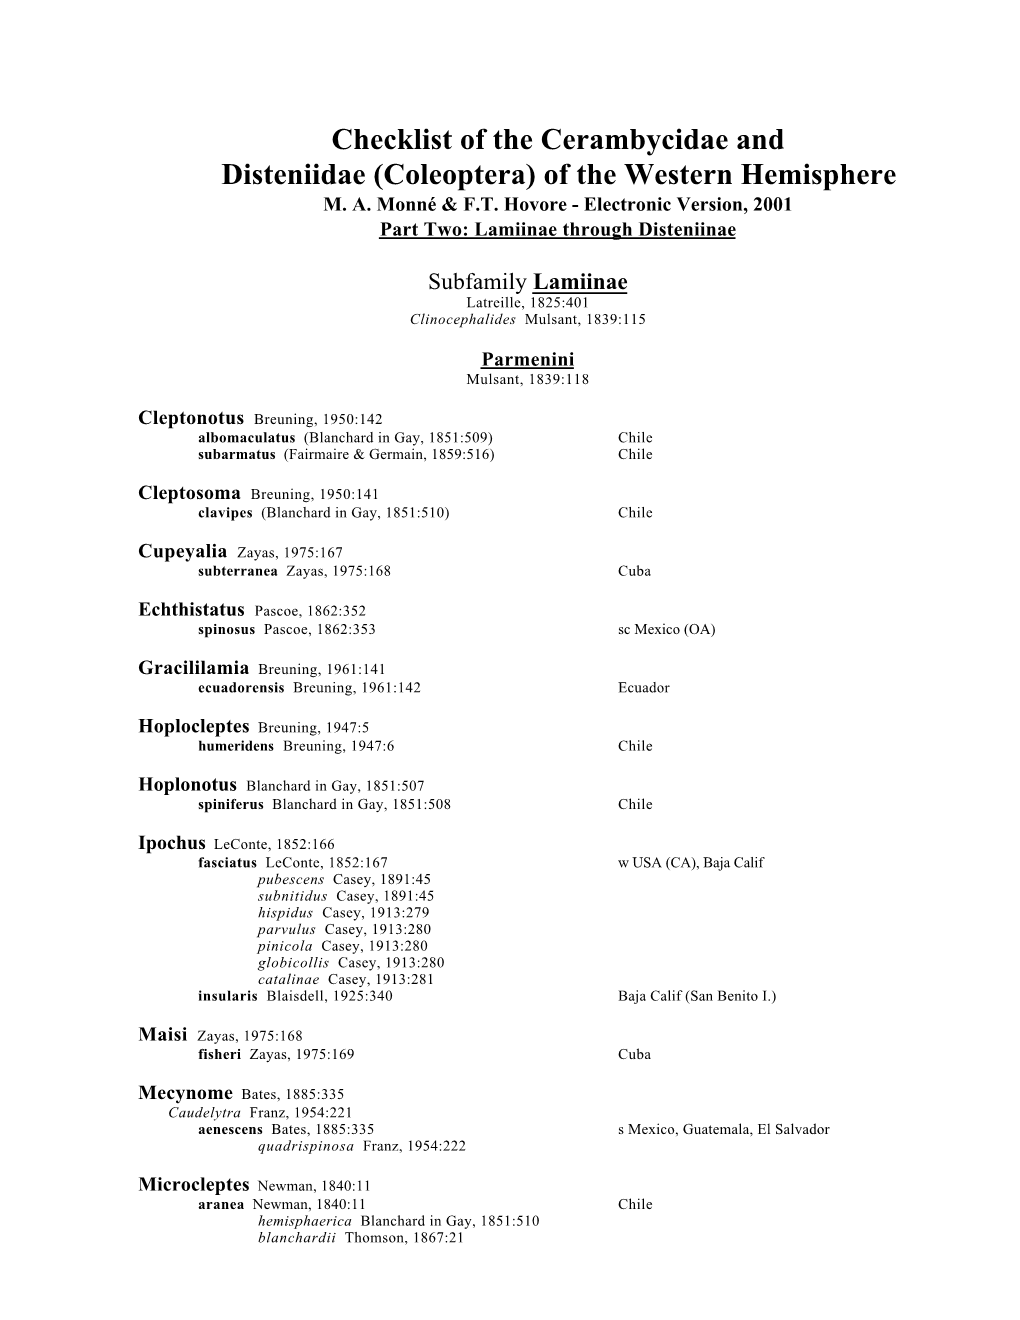 Checklist of the Cerambycidae and Disteniidae (Coleoptera) of the Western Hemisphere M